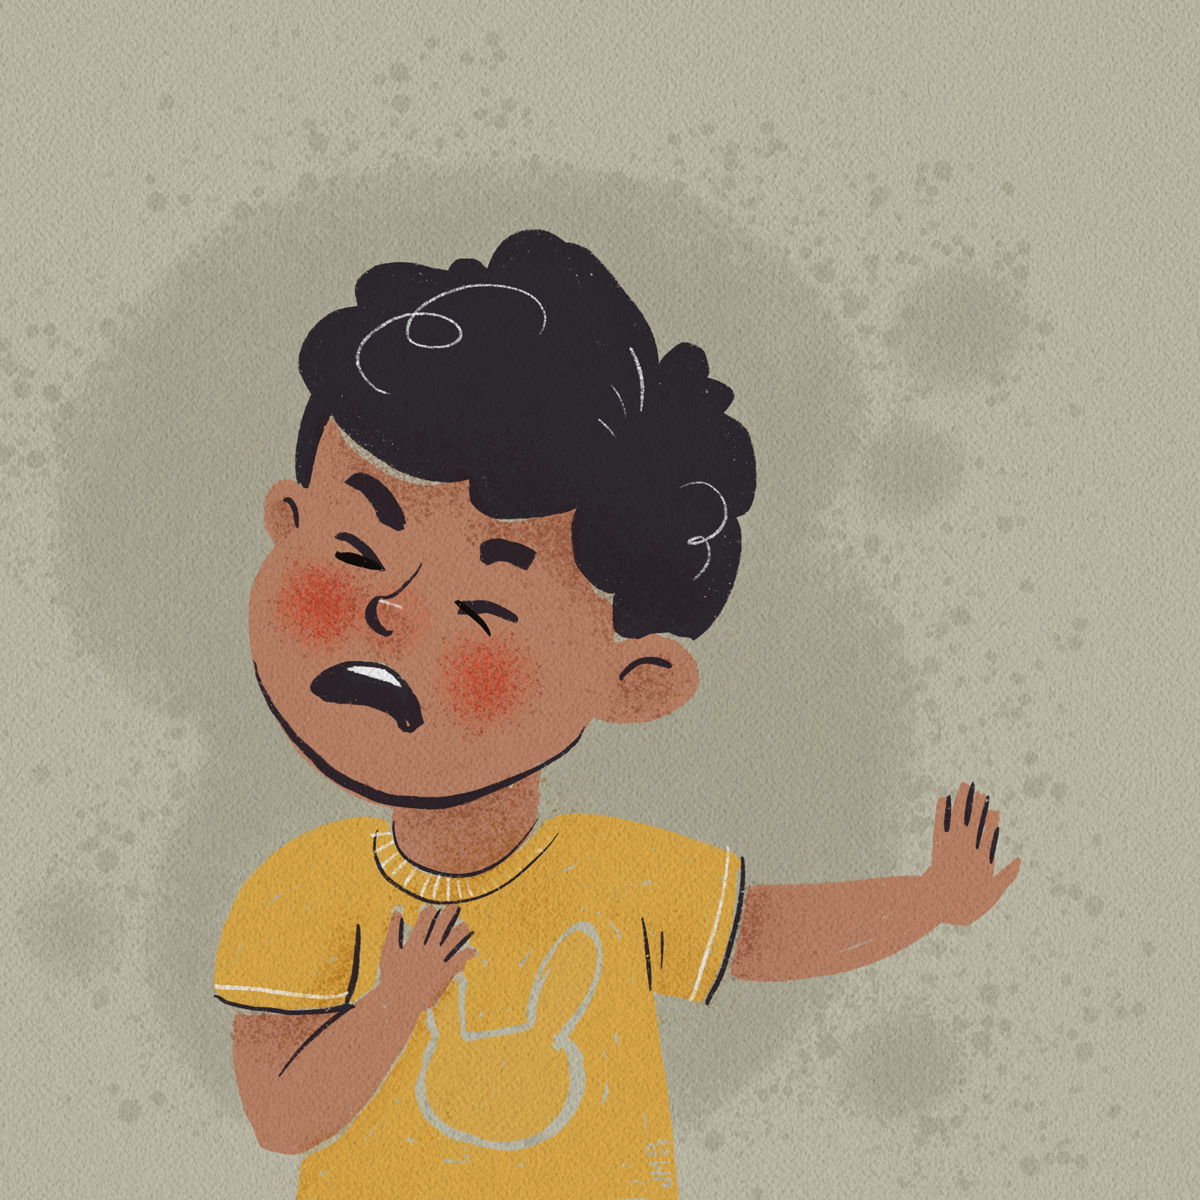 Illustration of boy refusing demand PDA